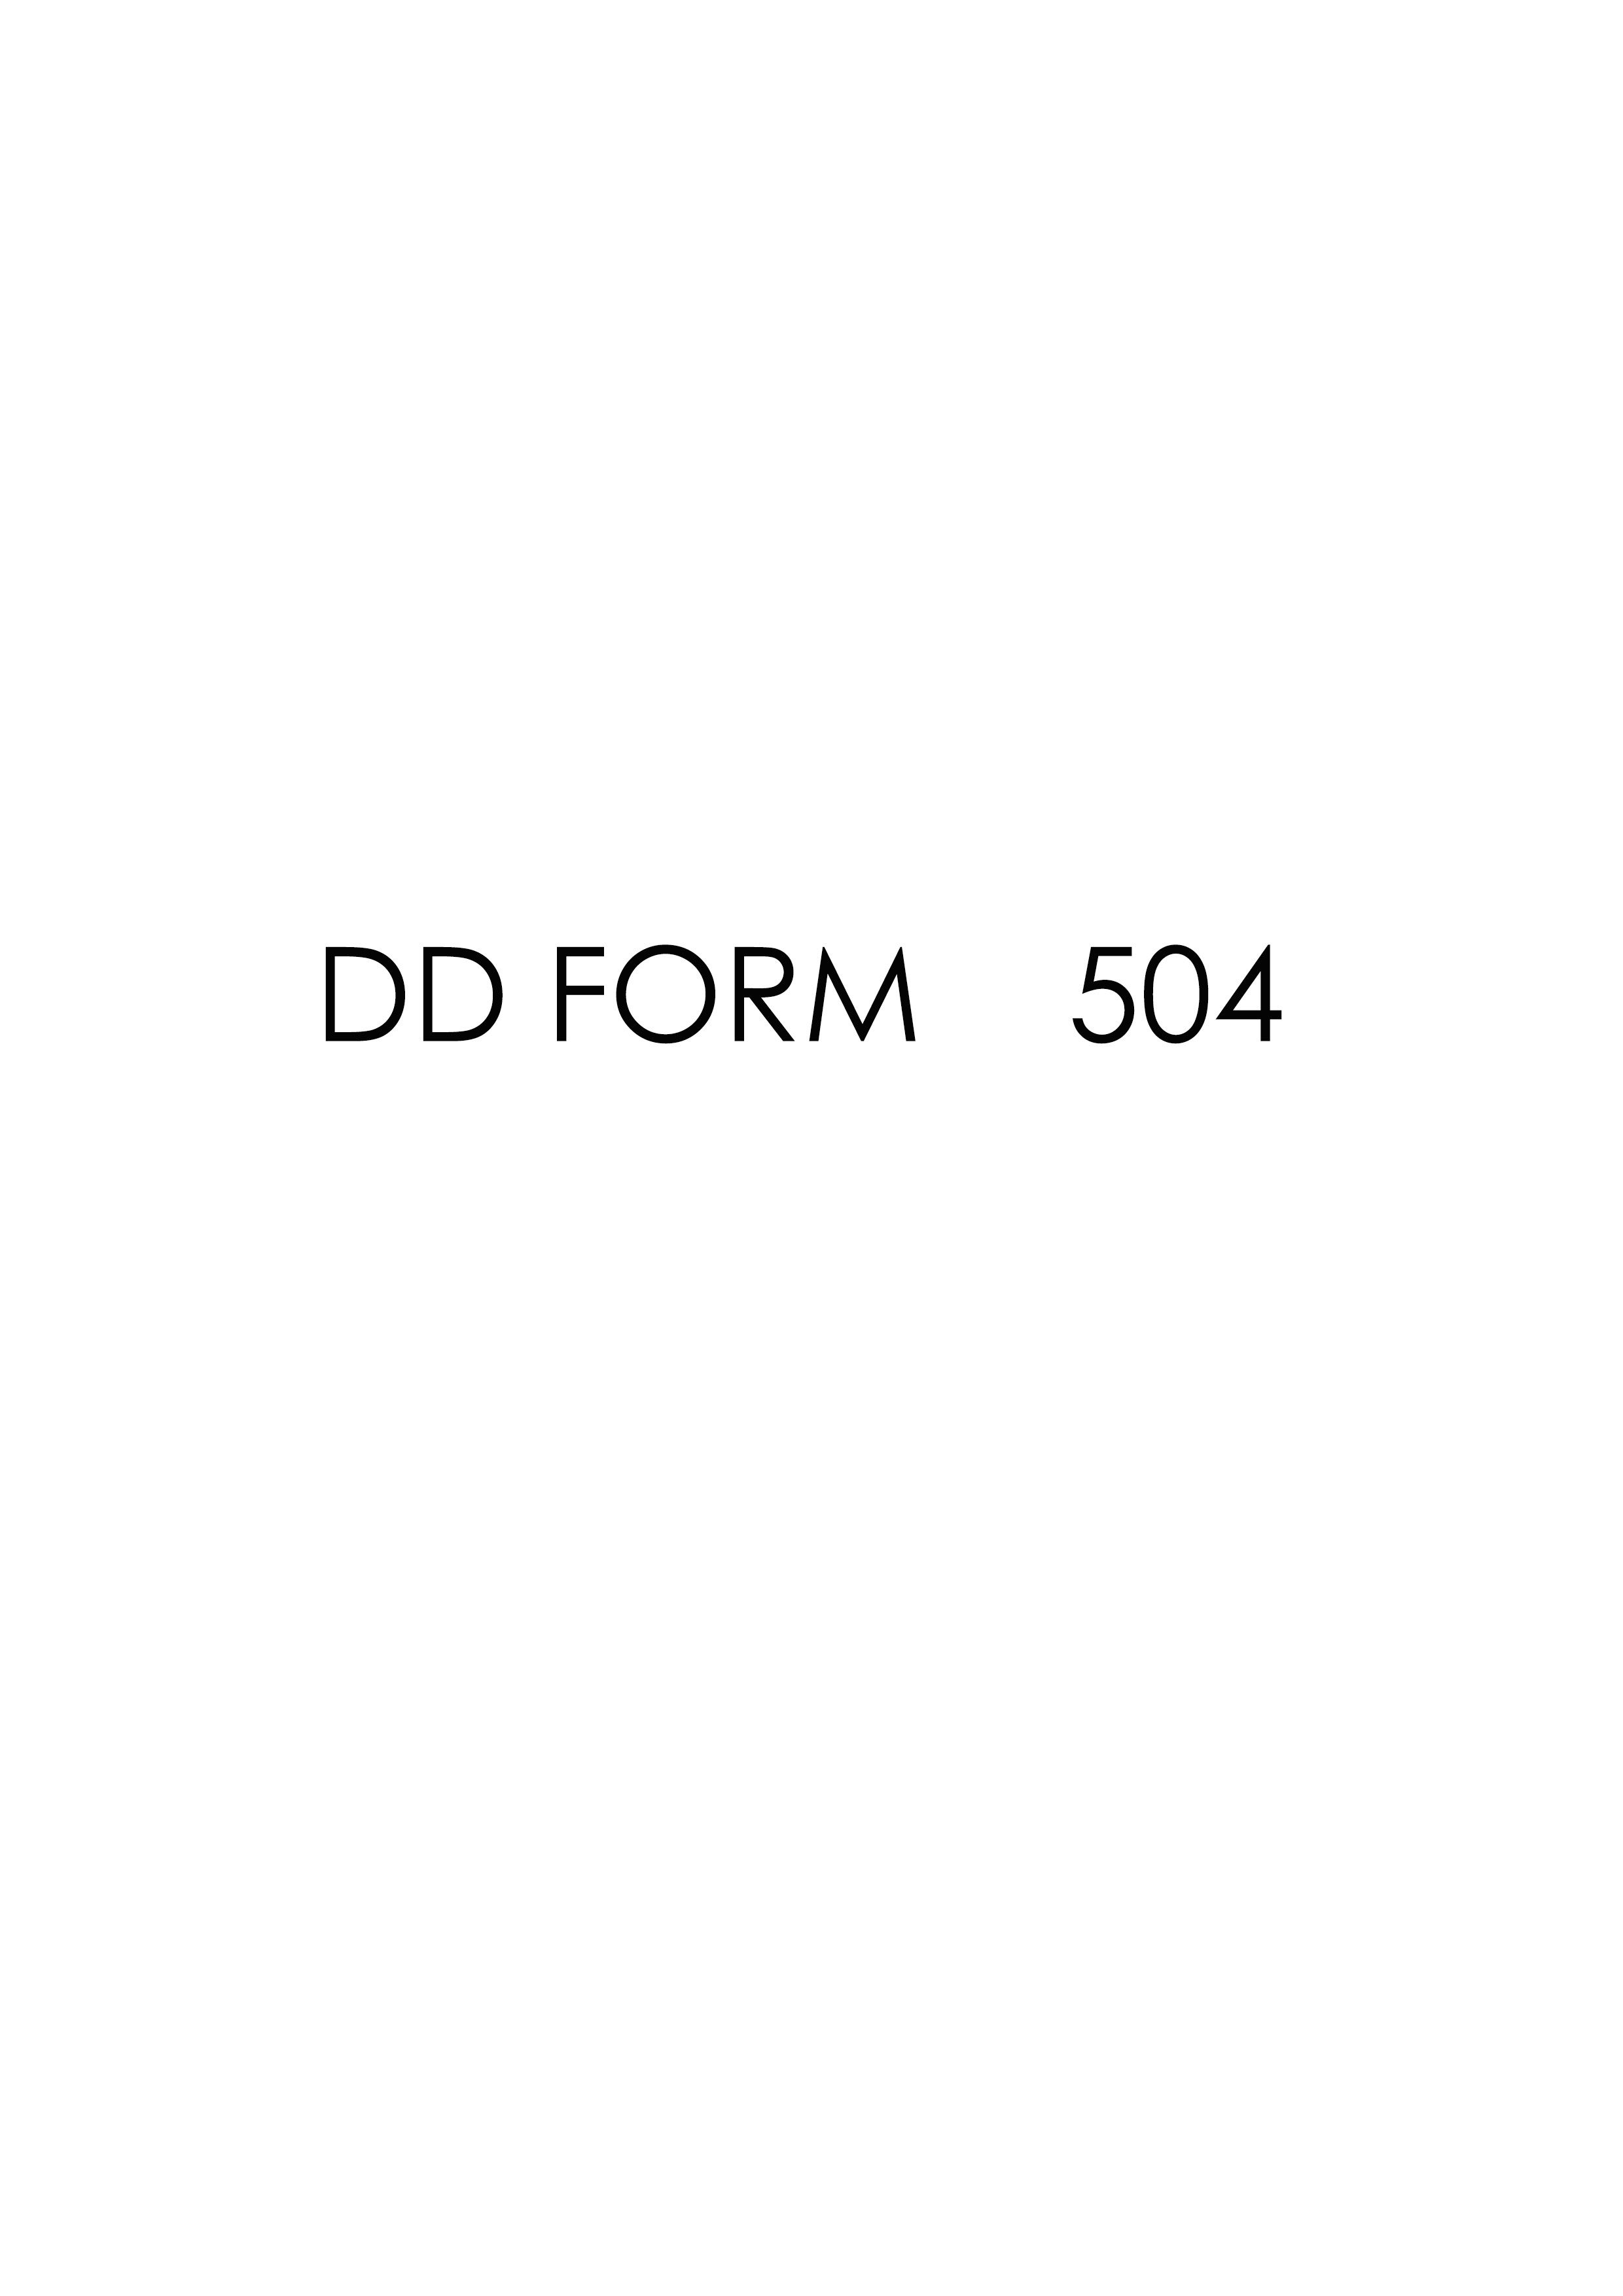 Download dd form 504